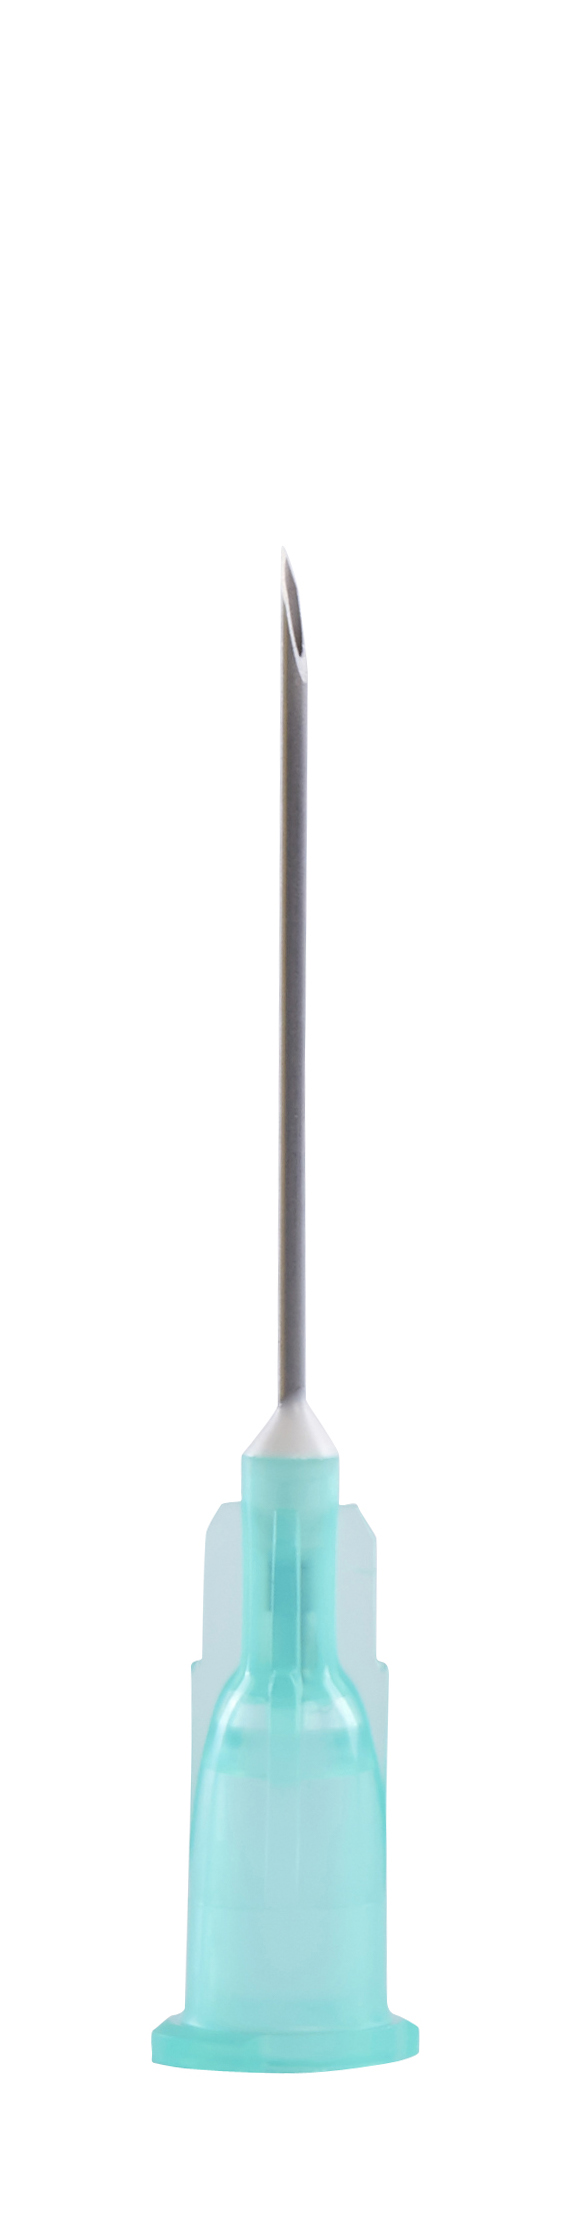 KRUUSE Disposable Needle, 0.8 x 25 mm, 21G x 1